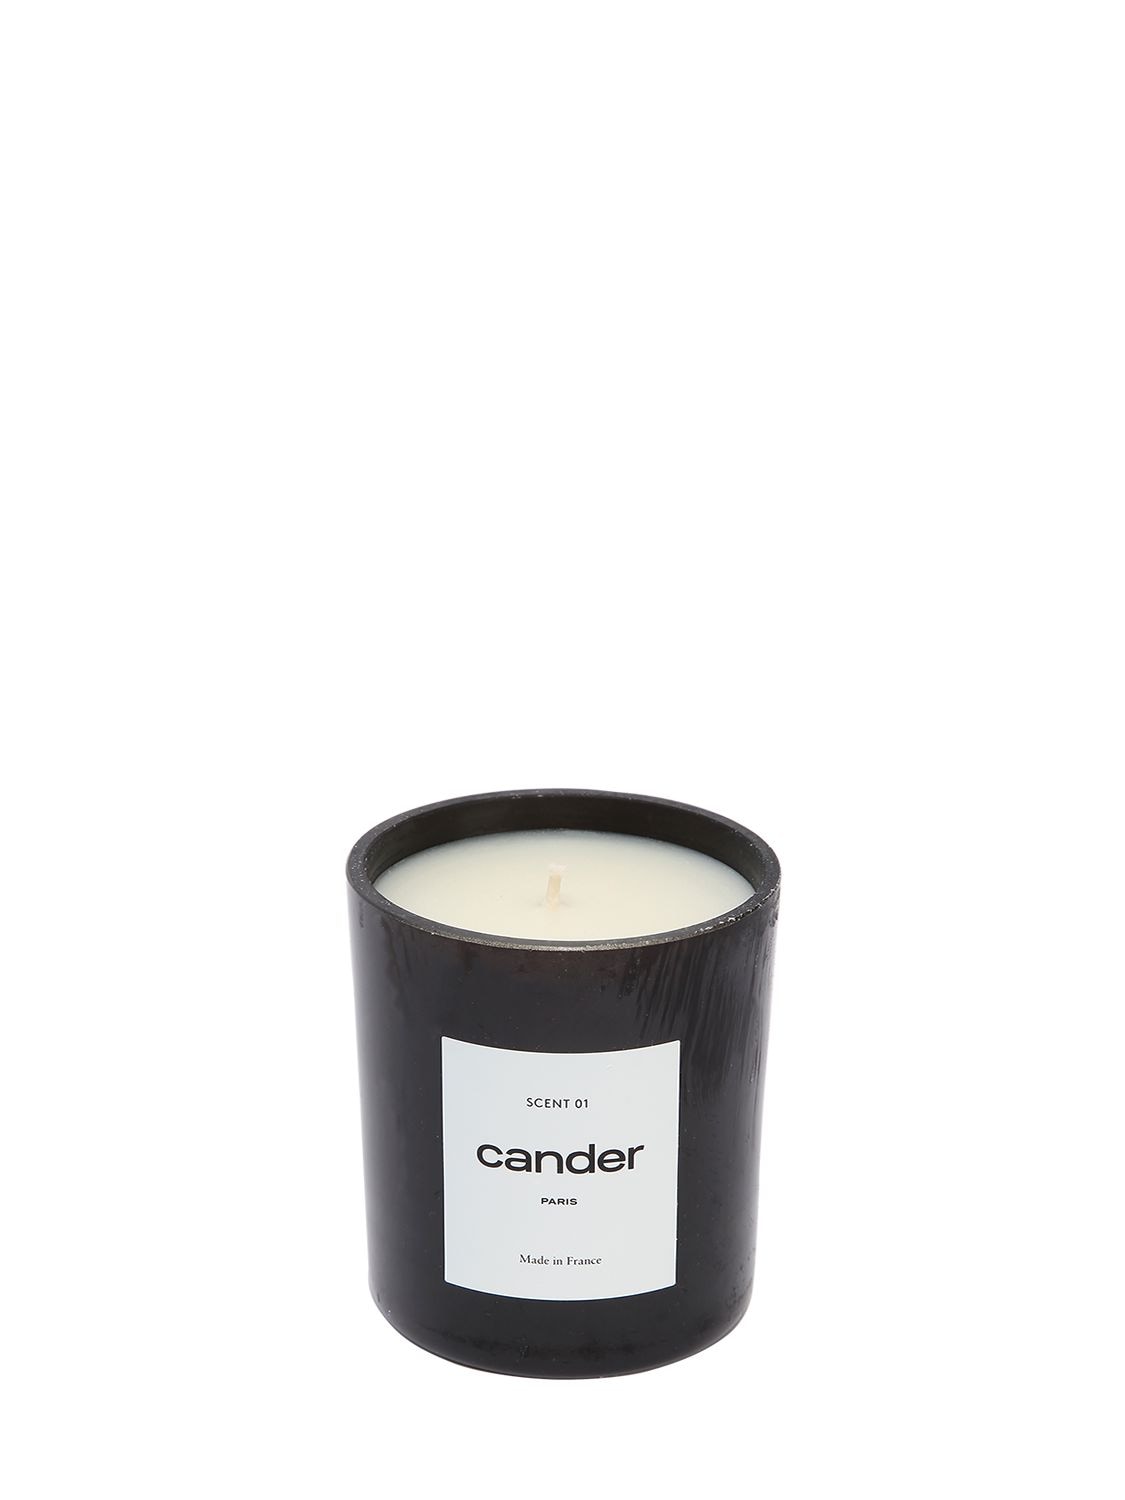 Cander Paris "scent 01"香薰蜡烛 In Black